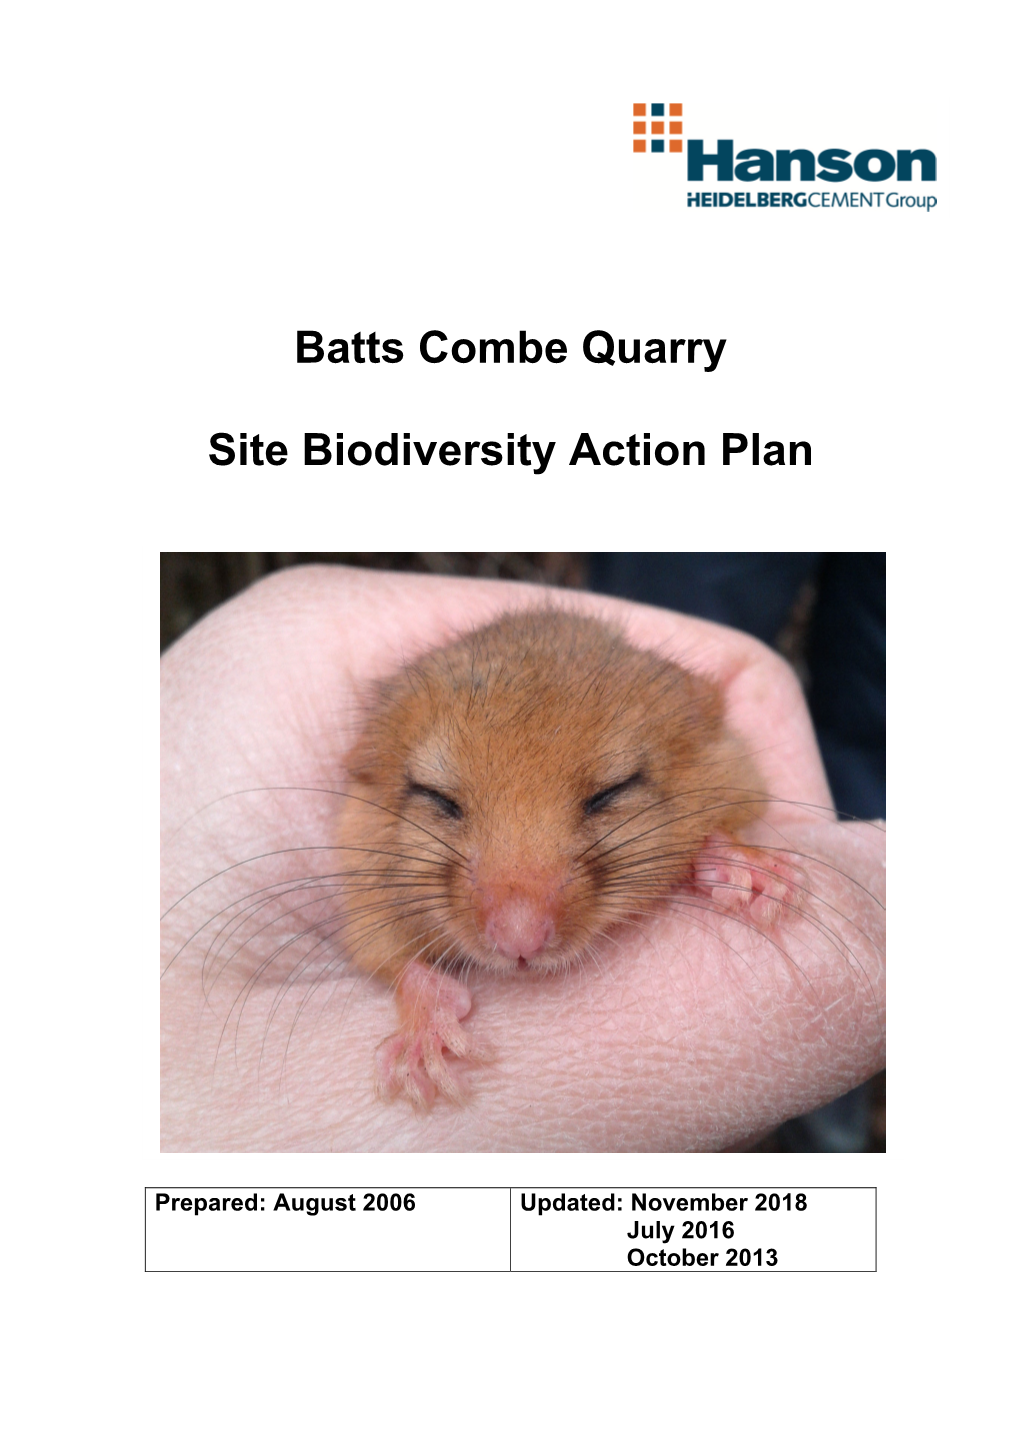 Site Biodiversity Action Plan